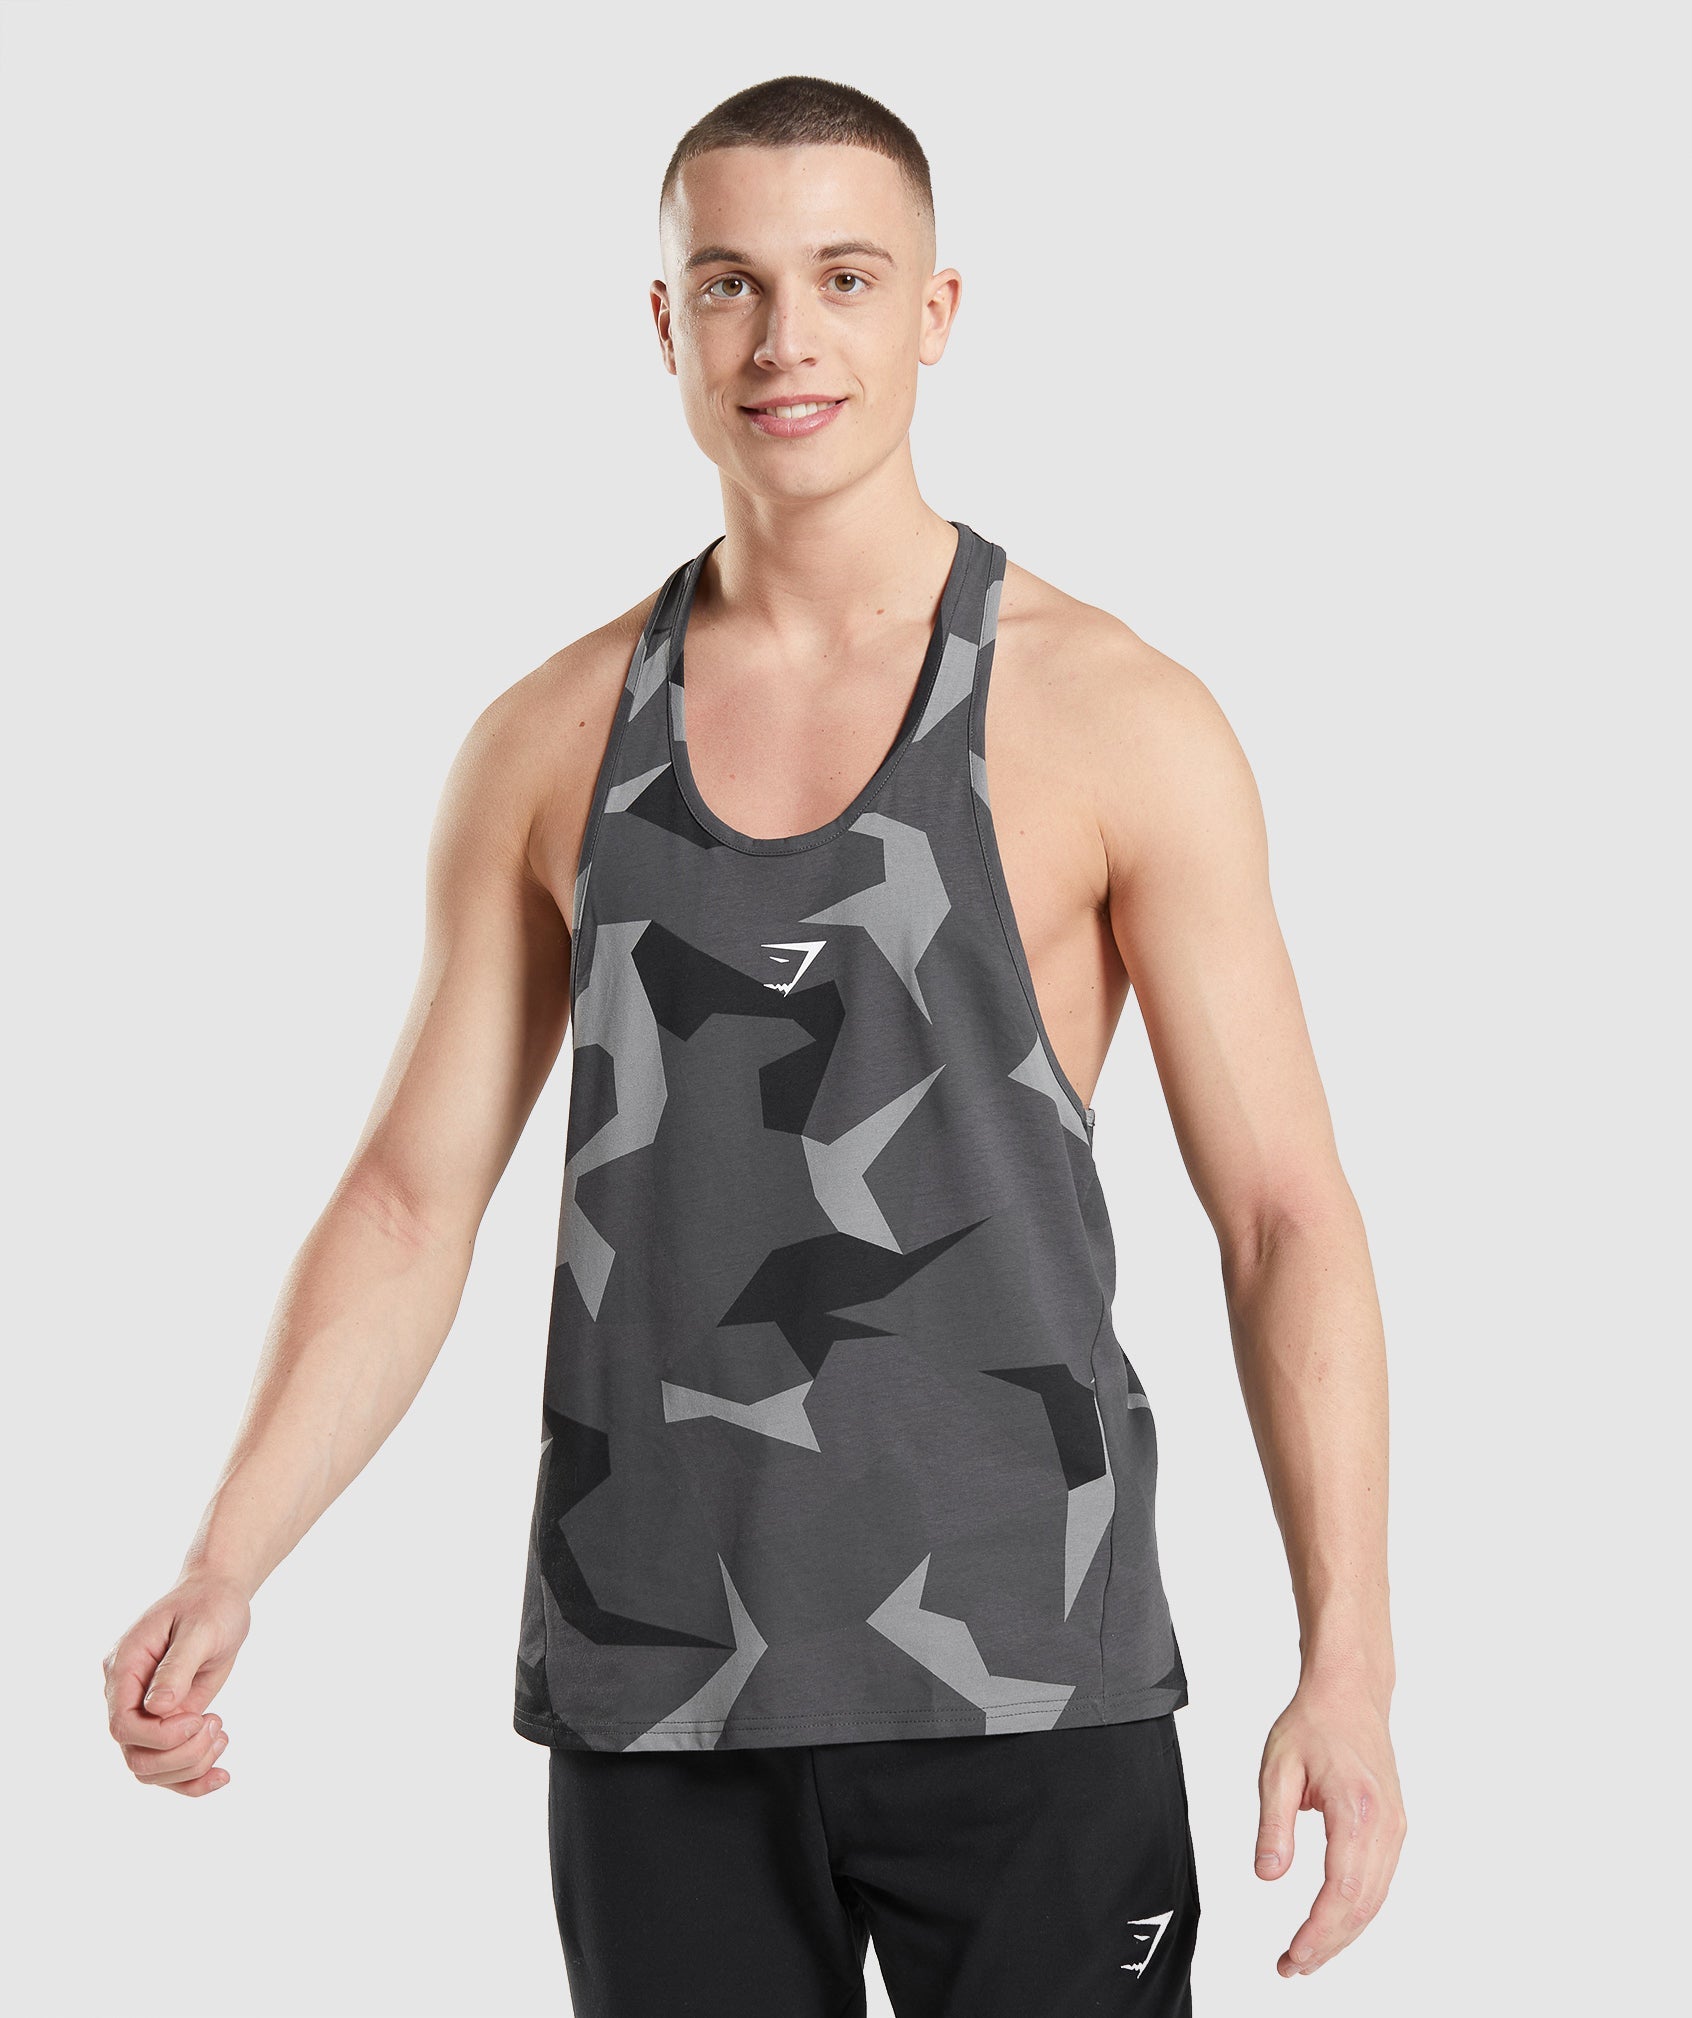 Gymshark Critical Camo Tank Top Active Shirt Mens S Small